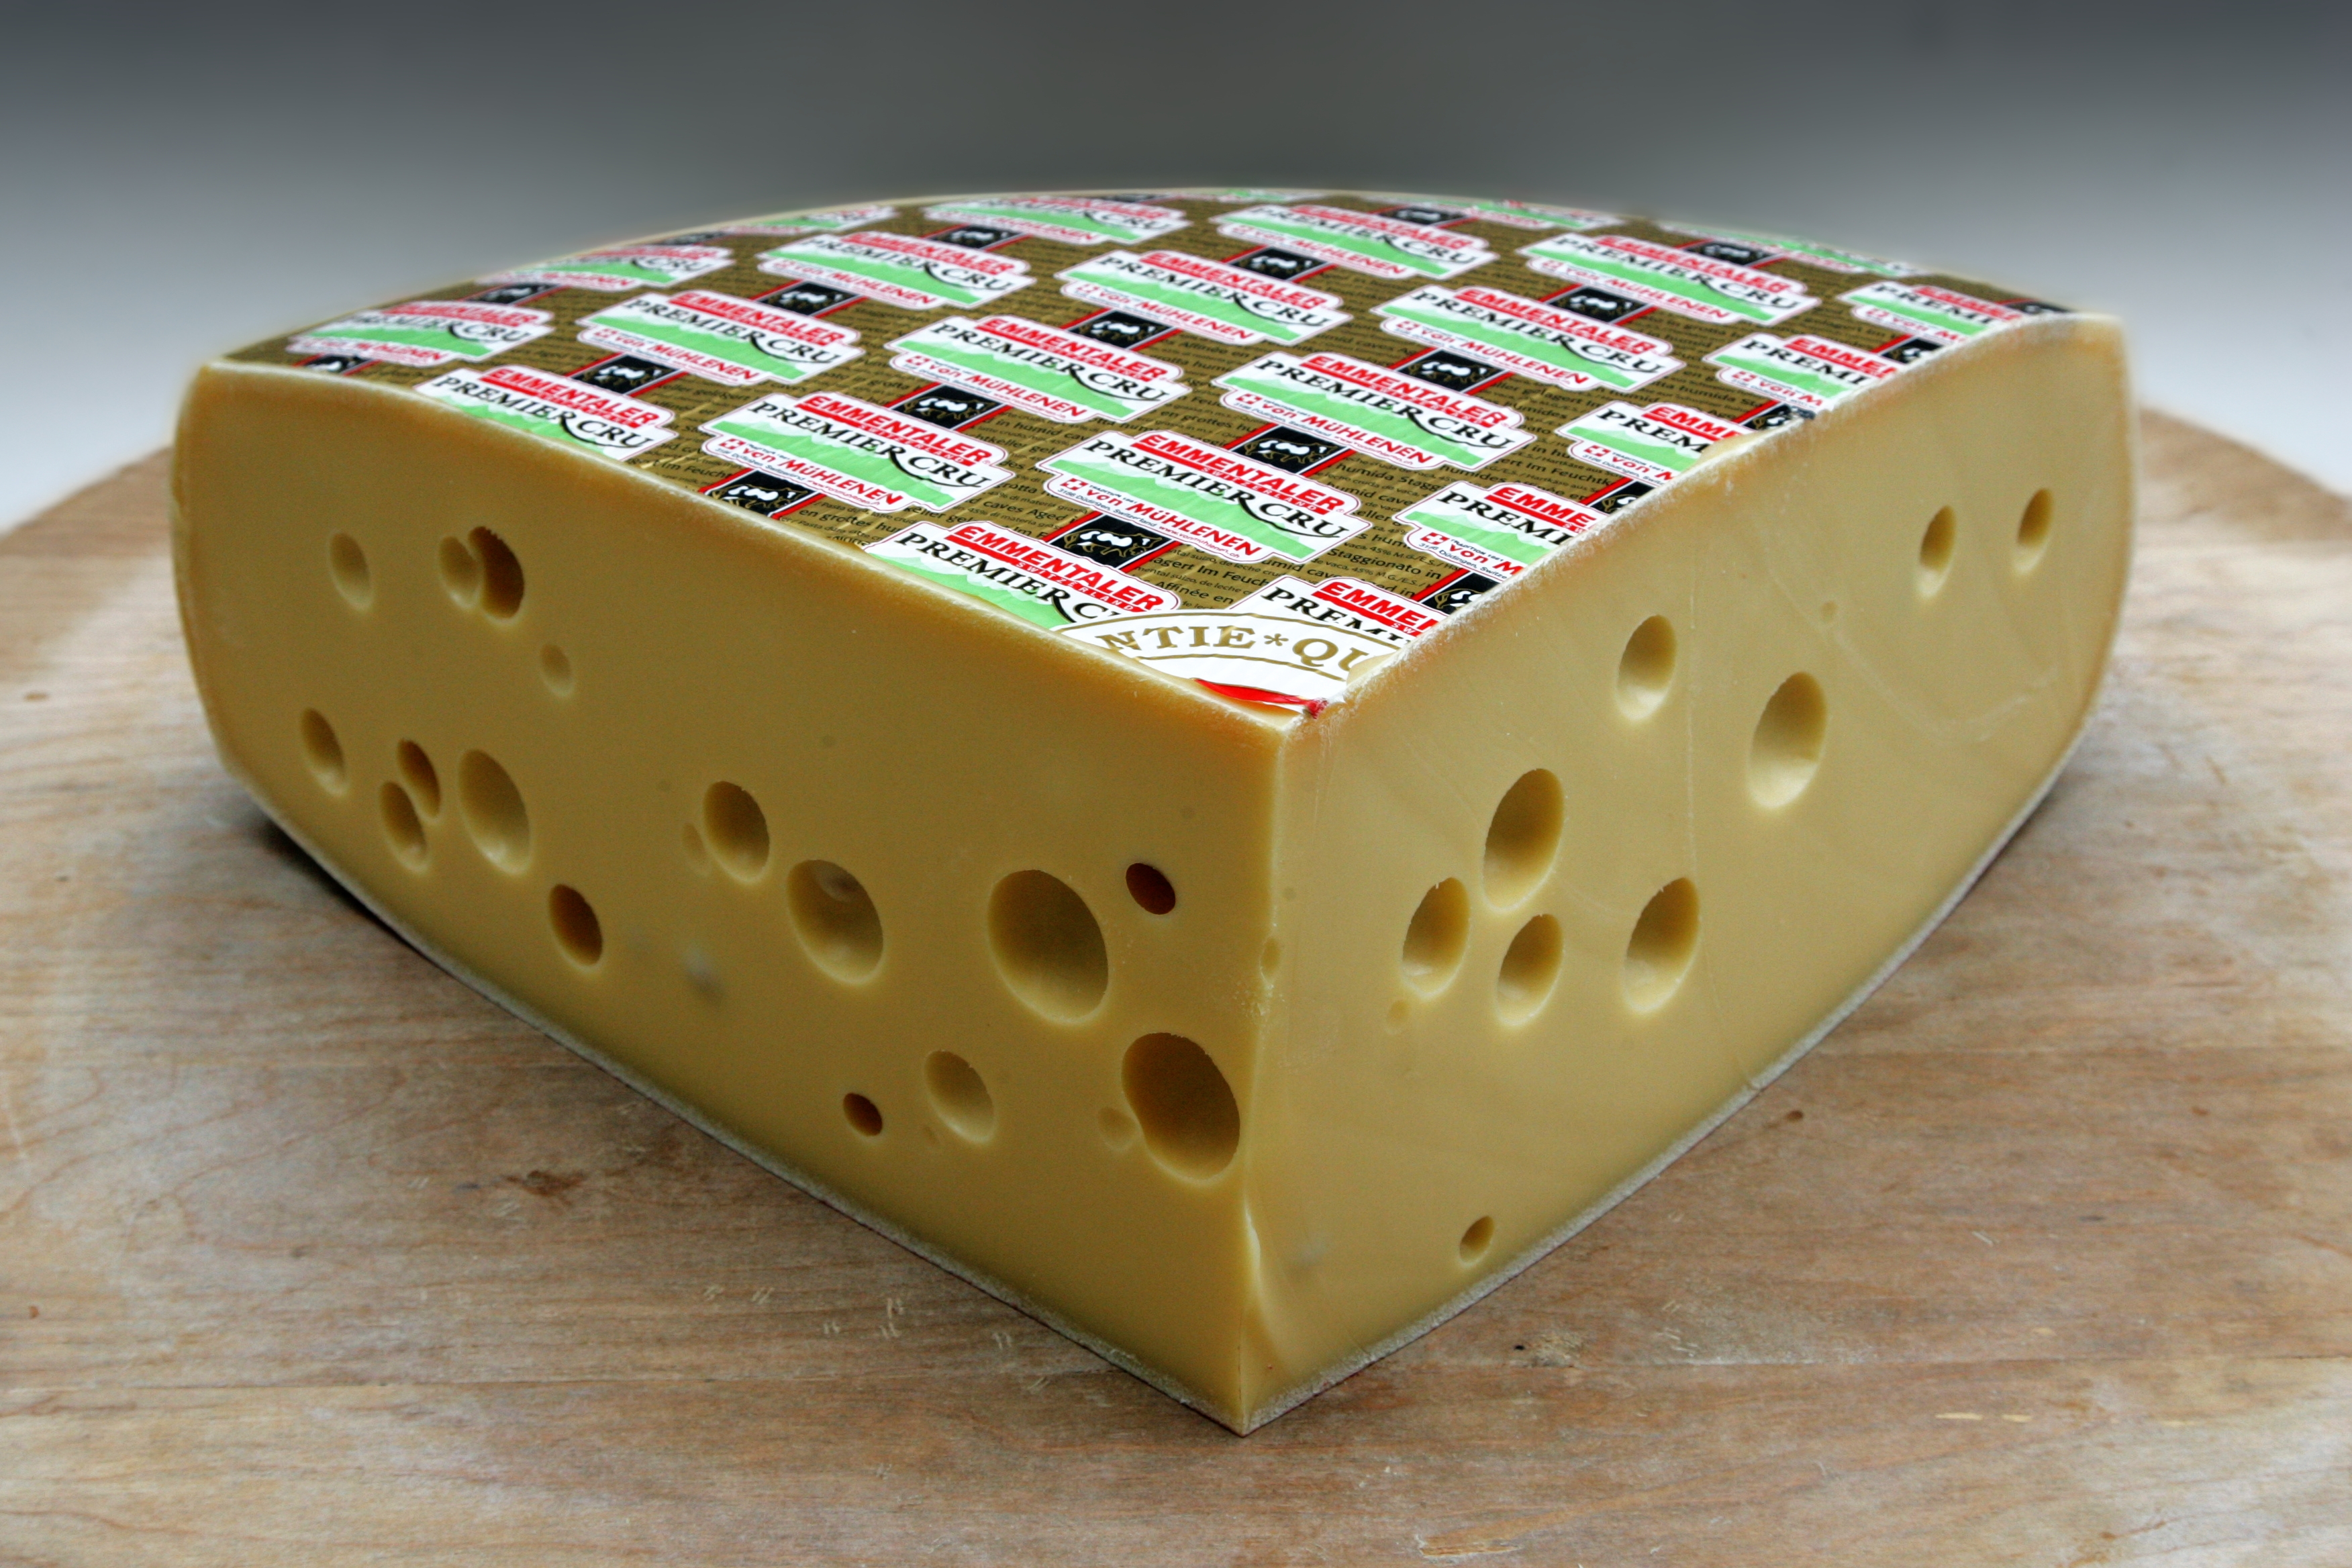 Emmental cheese - Wikipedia